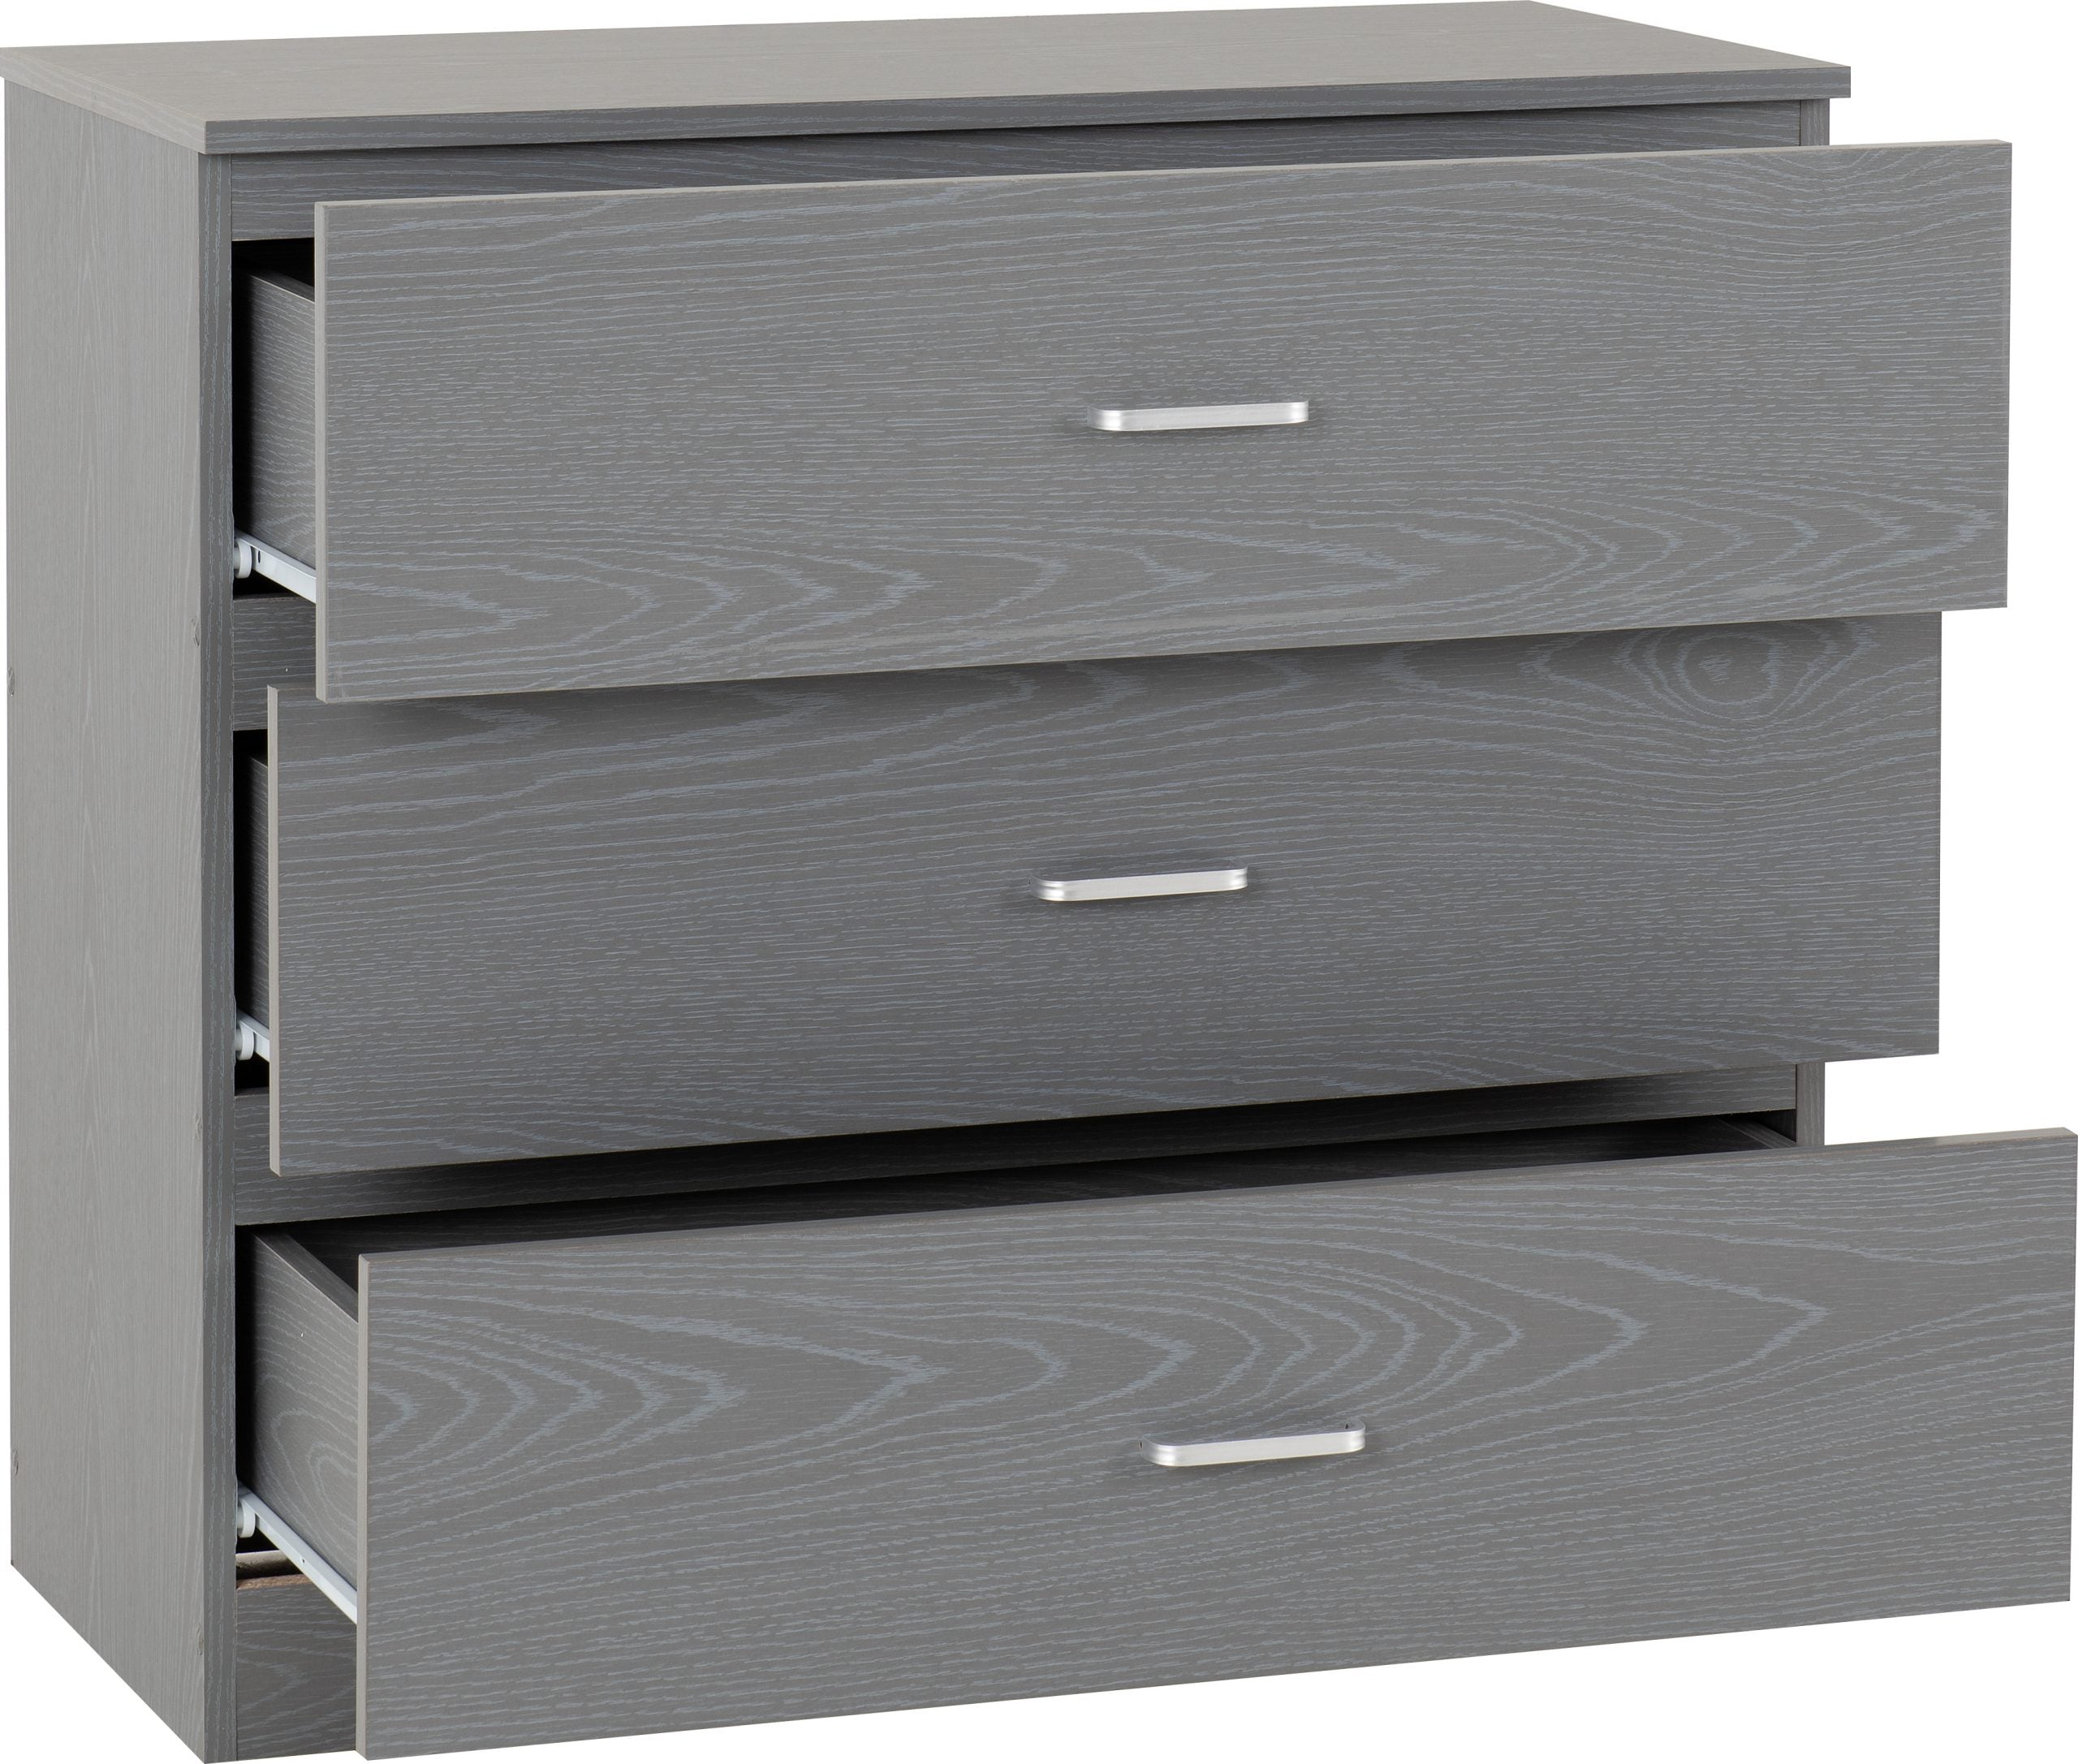 3 drawer chest grey